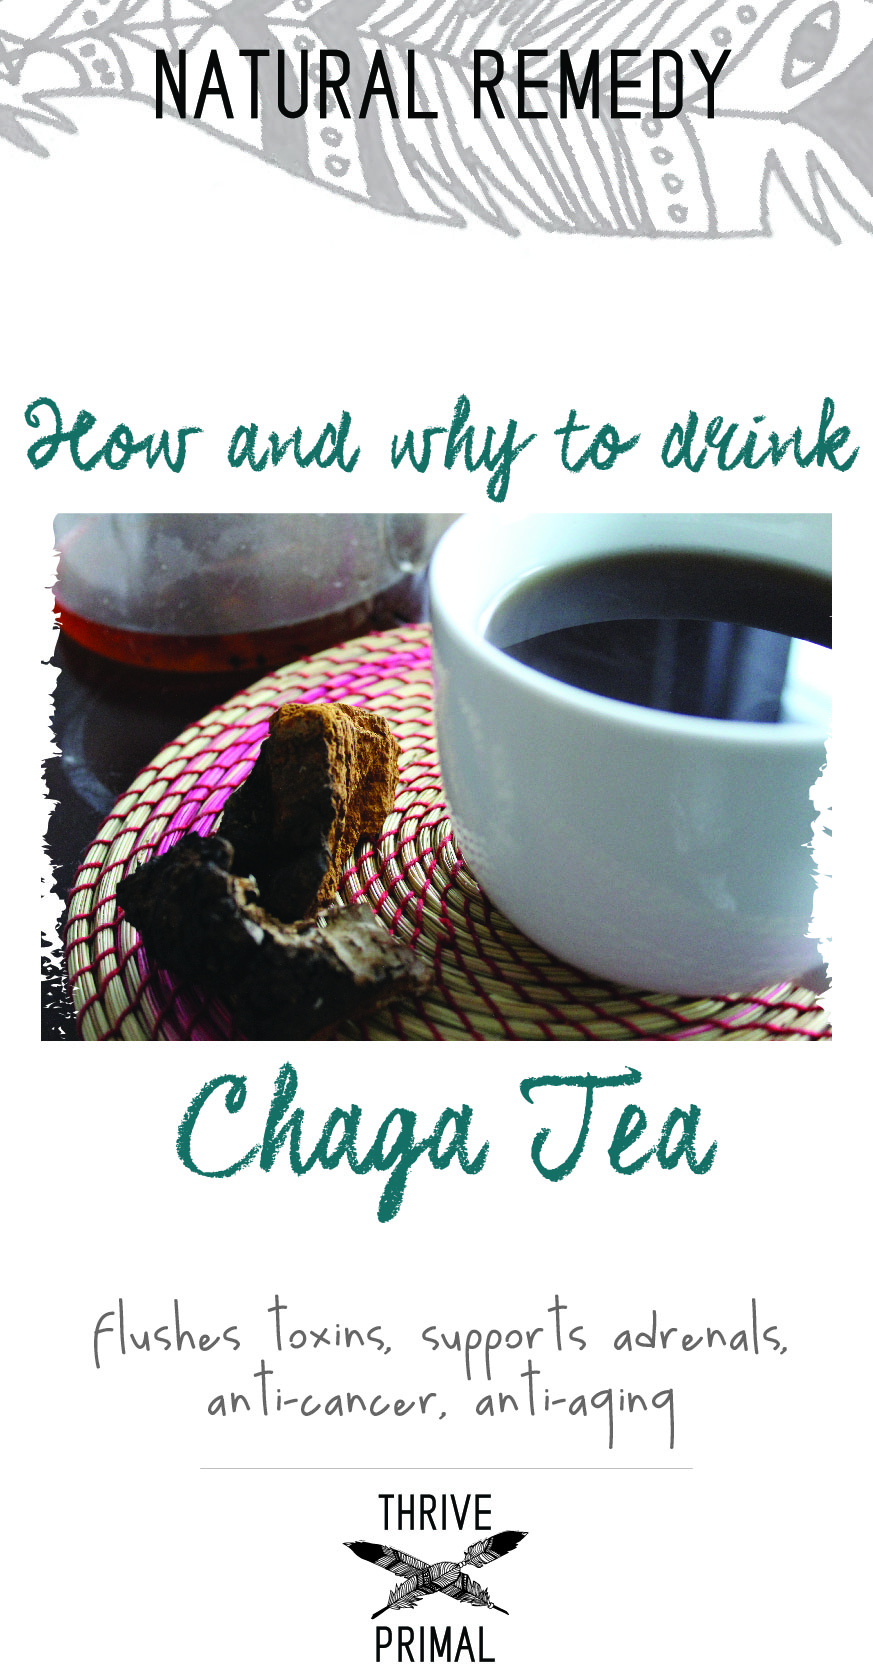 Thrive Primal - chaga tea remedy